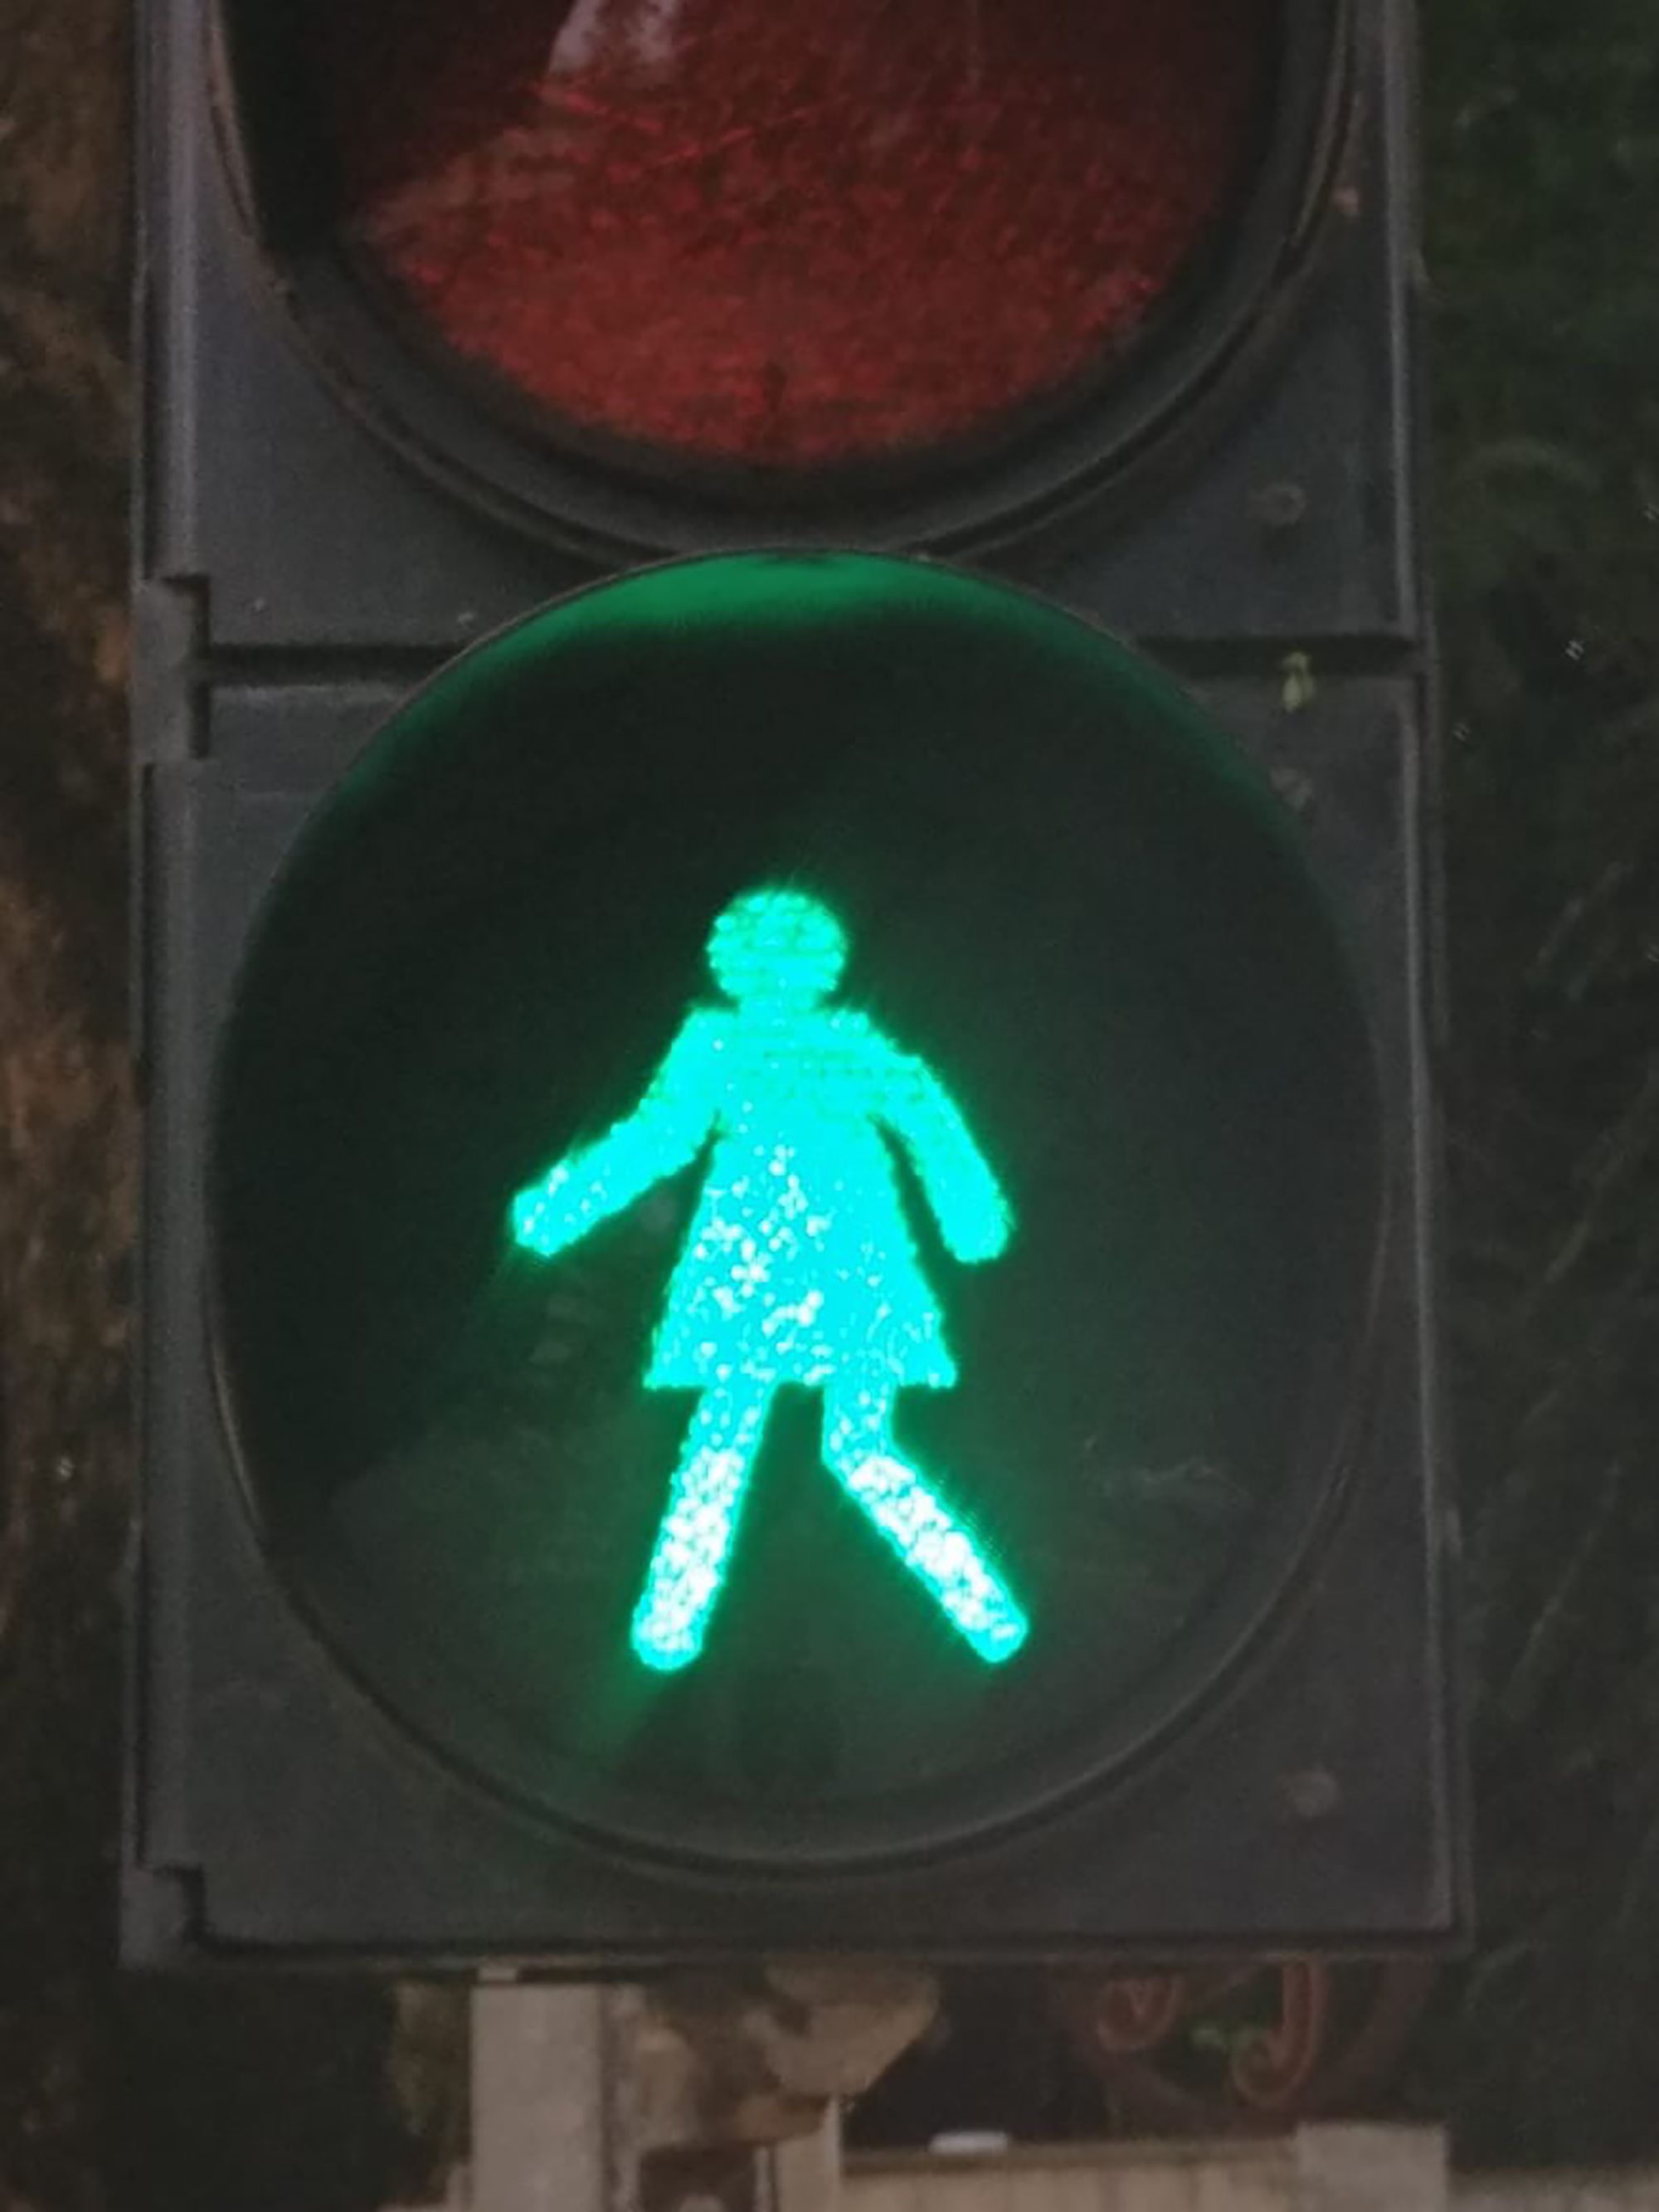 02 mumbai female traffic signal